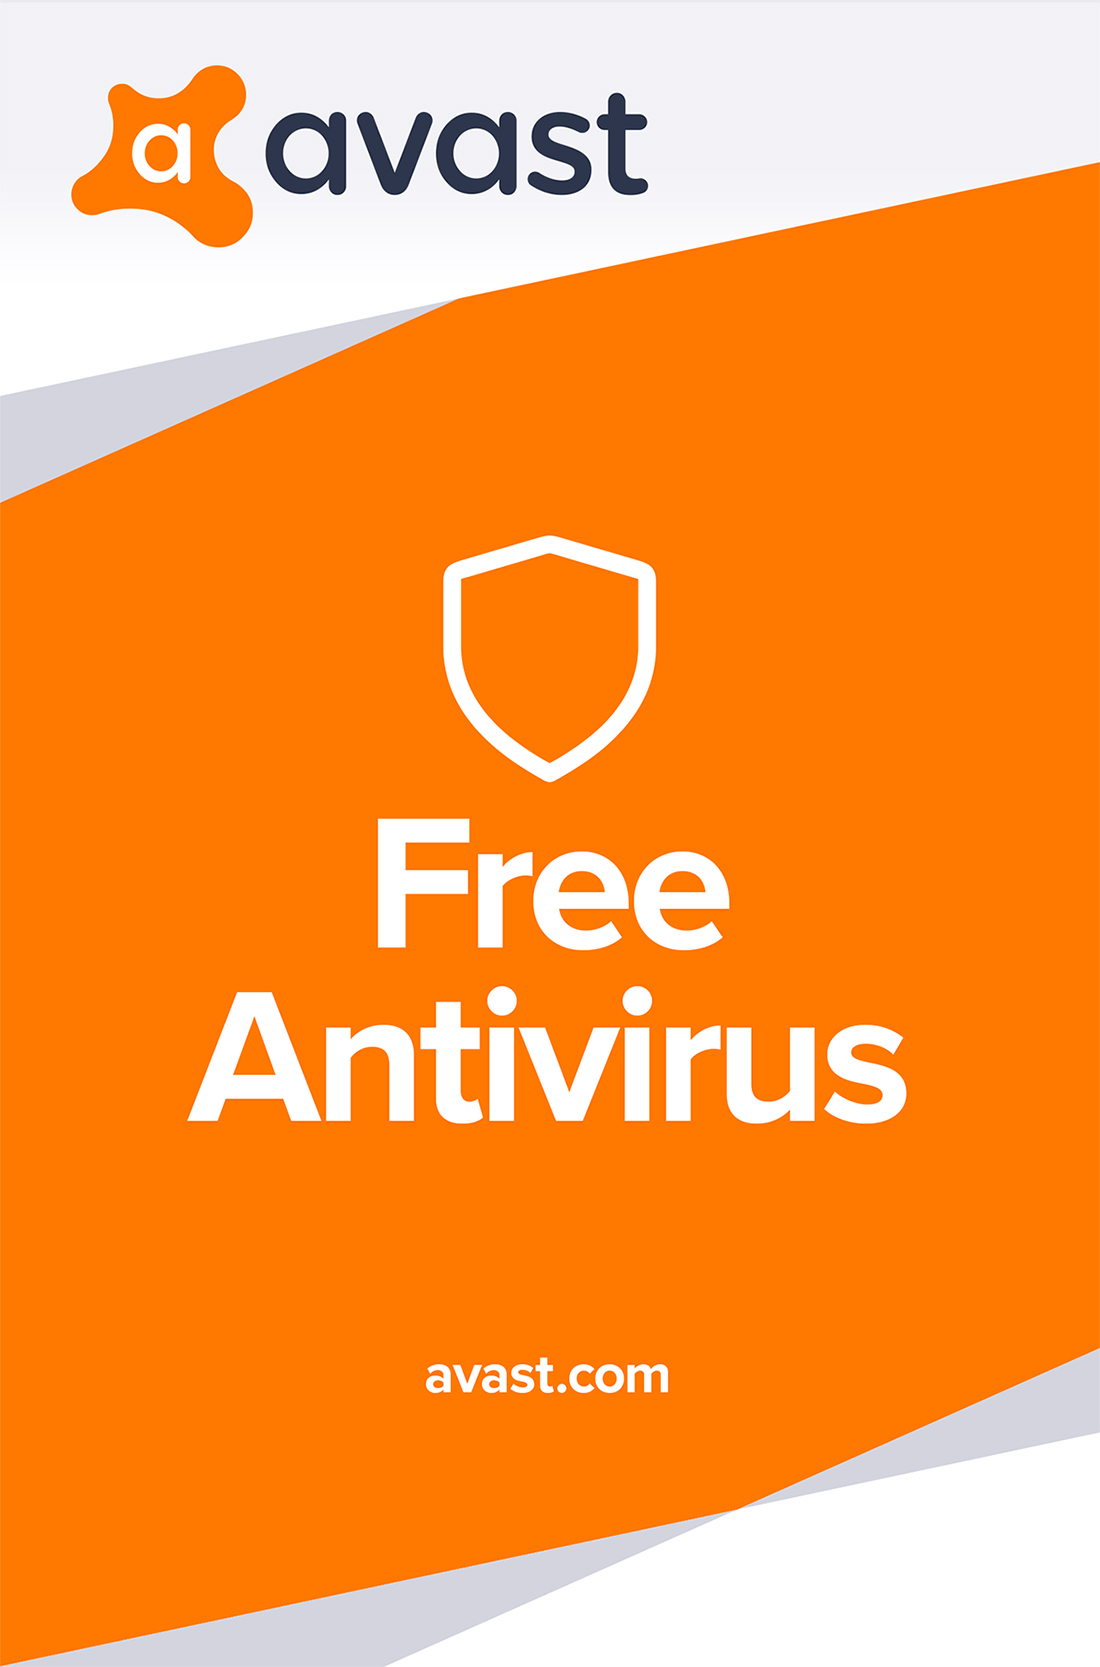 avast free antivirus download 2018